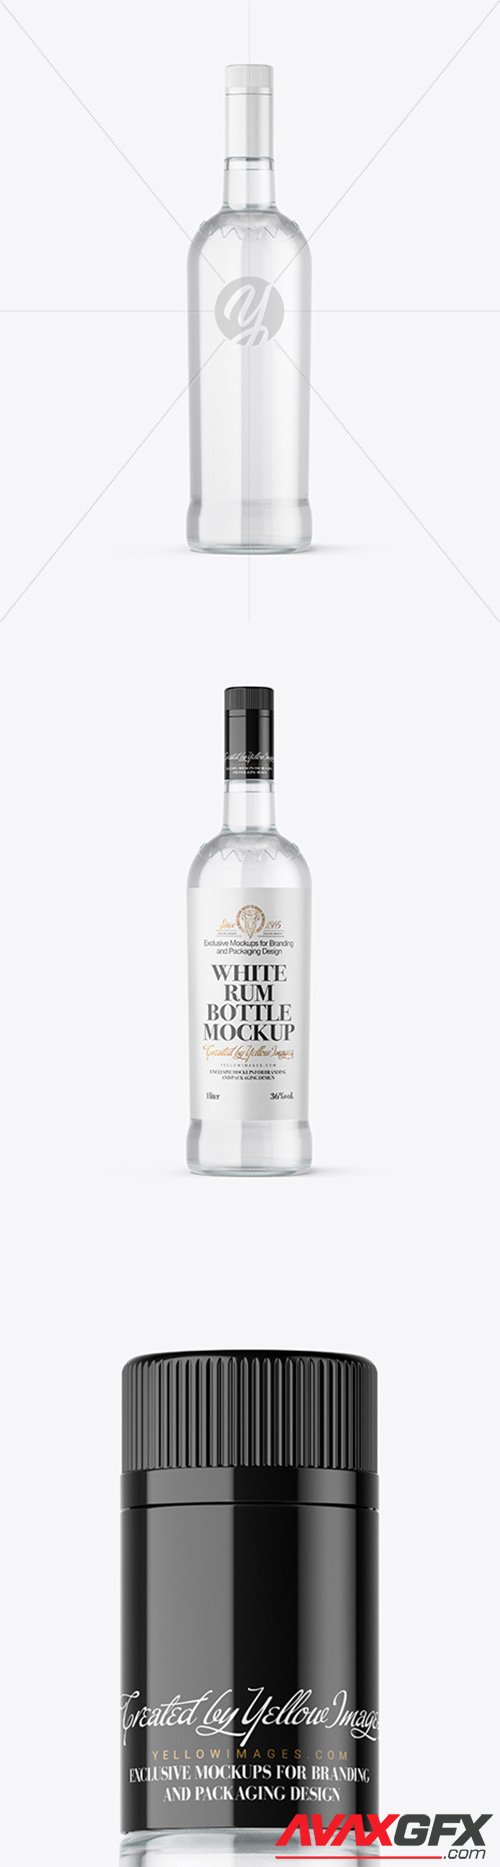 Clear Glass White Rum Bottle Mockup 61483